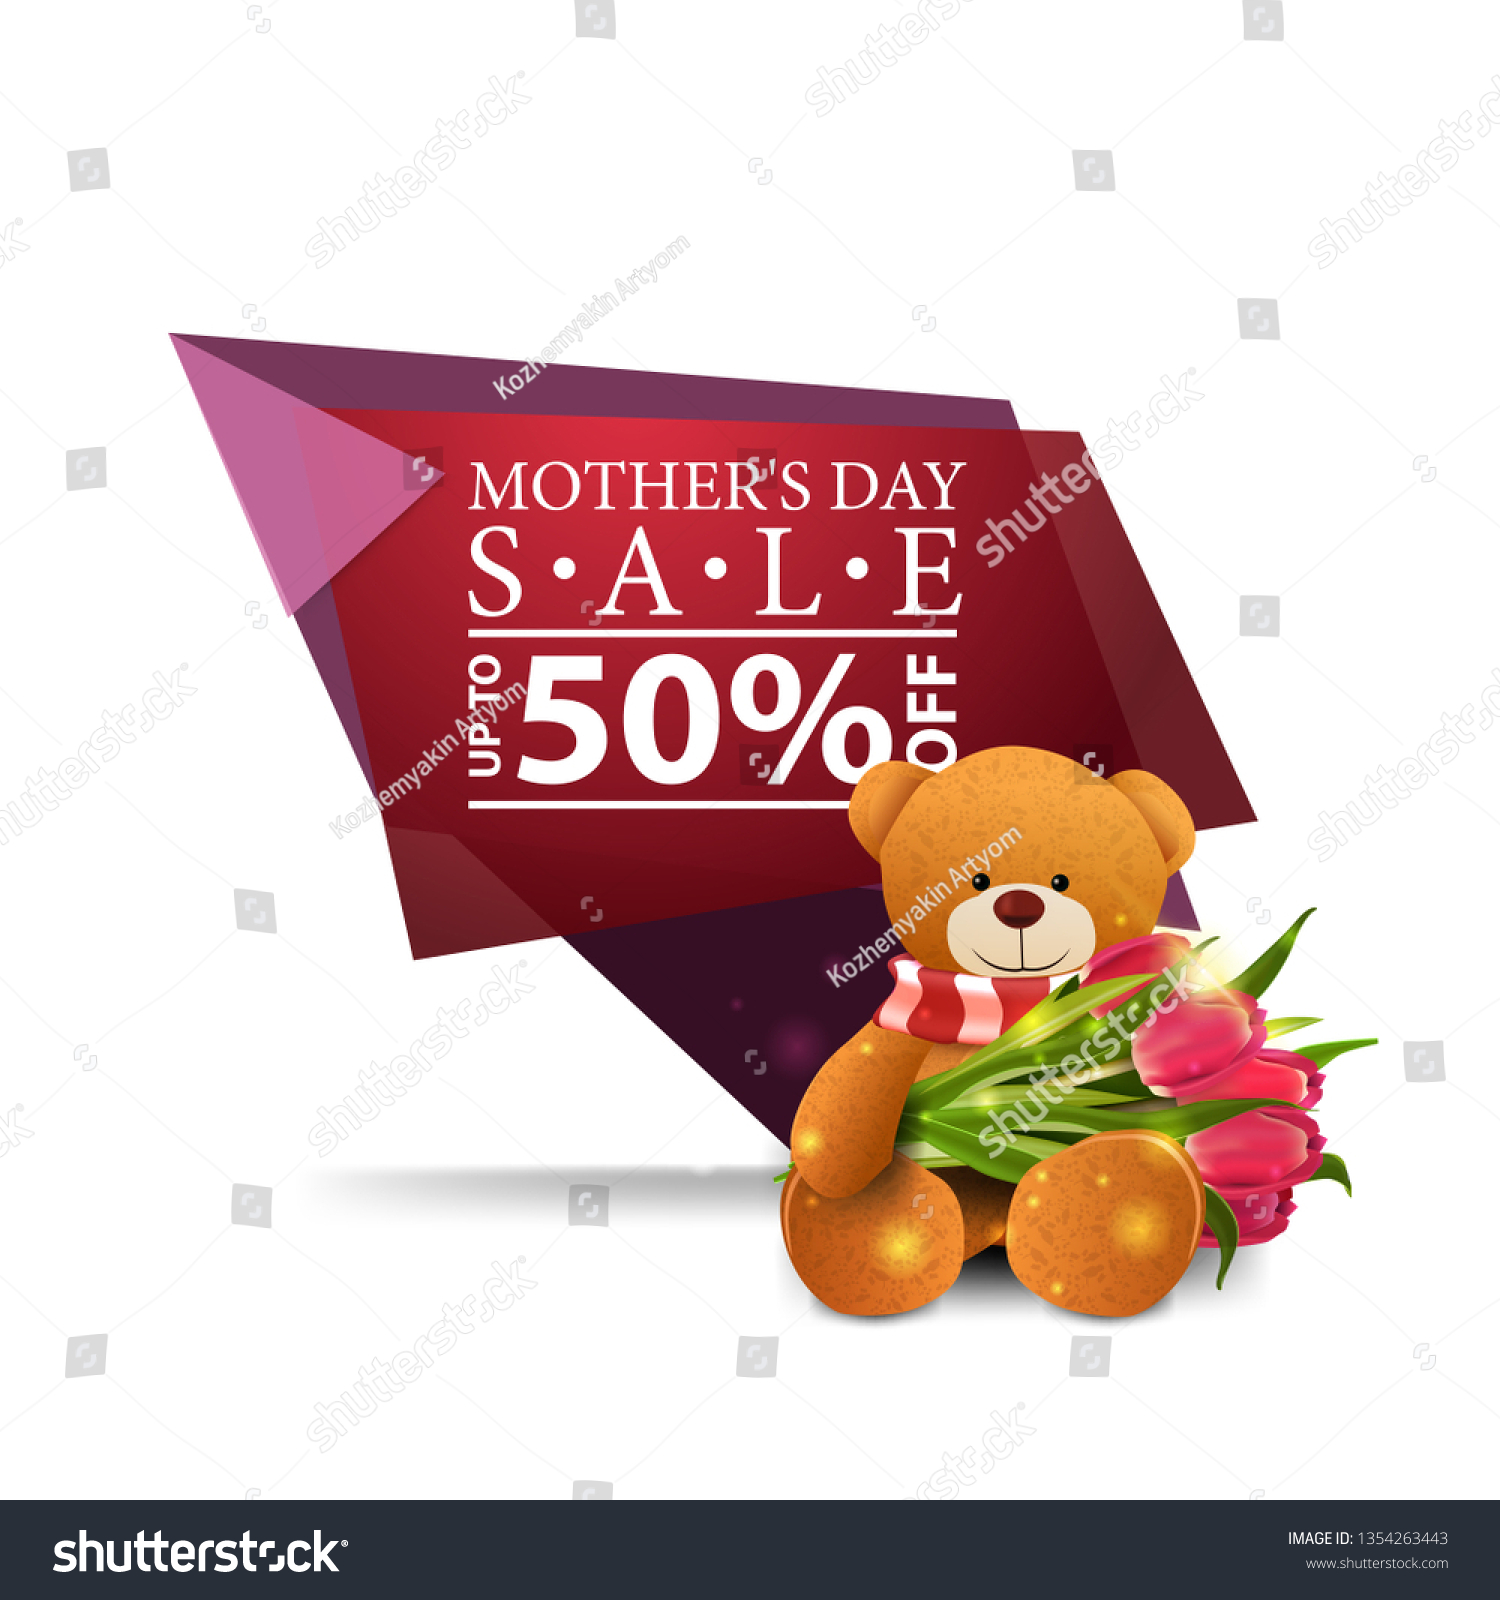 teddy bear discount